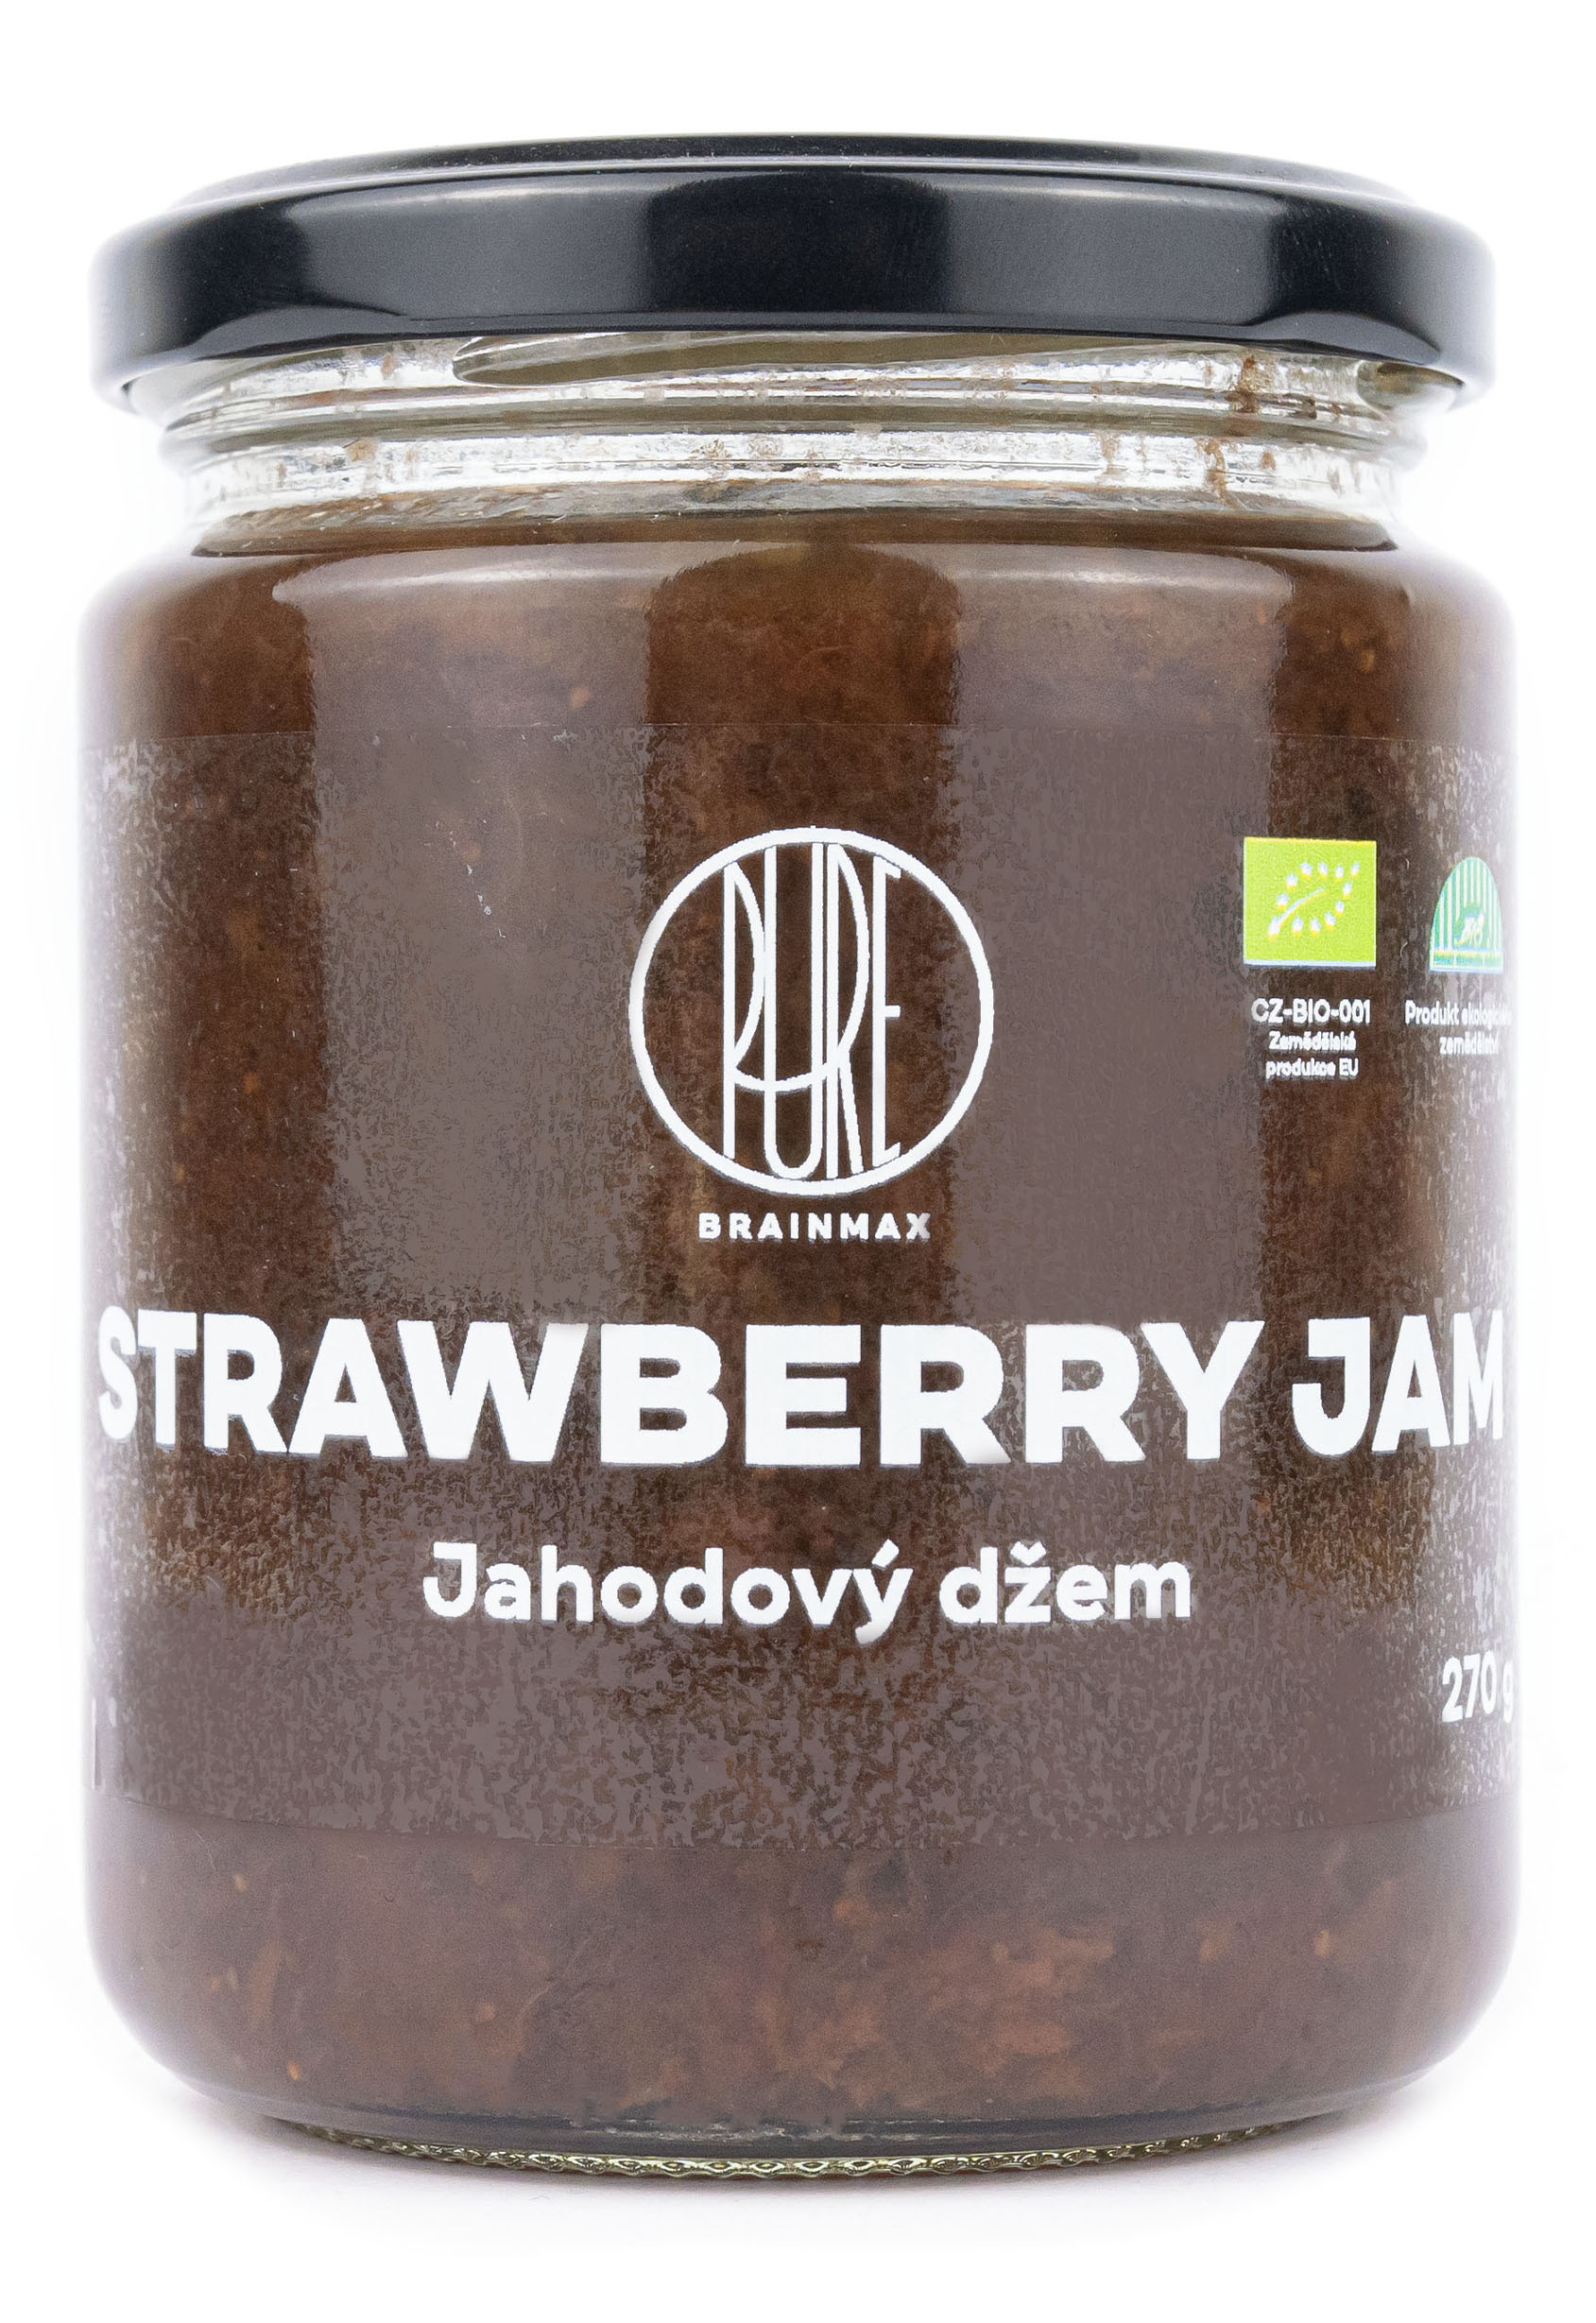 Levně BrainMax Pure Strawberry Jam, Džem Jahoda, BIO, 270g *CZ-BIO-001 certifikát